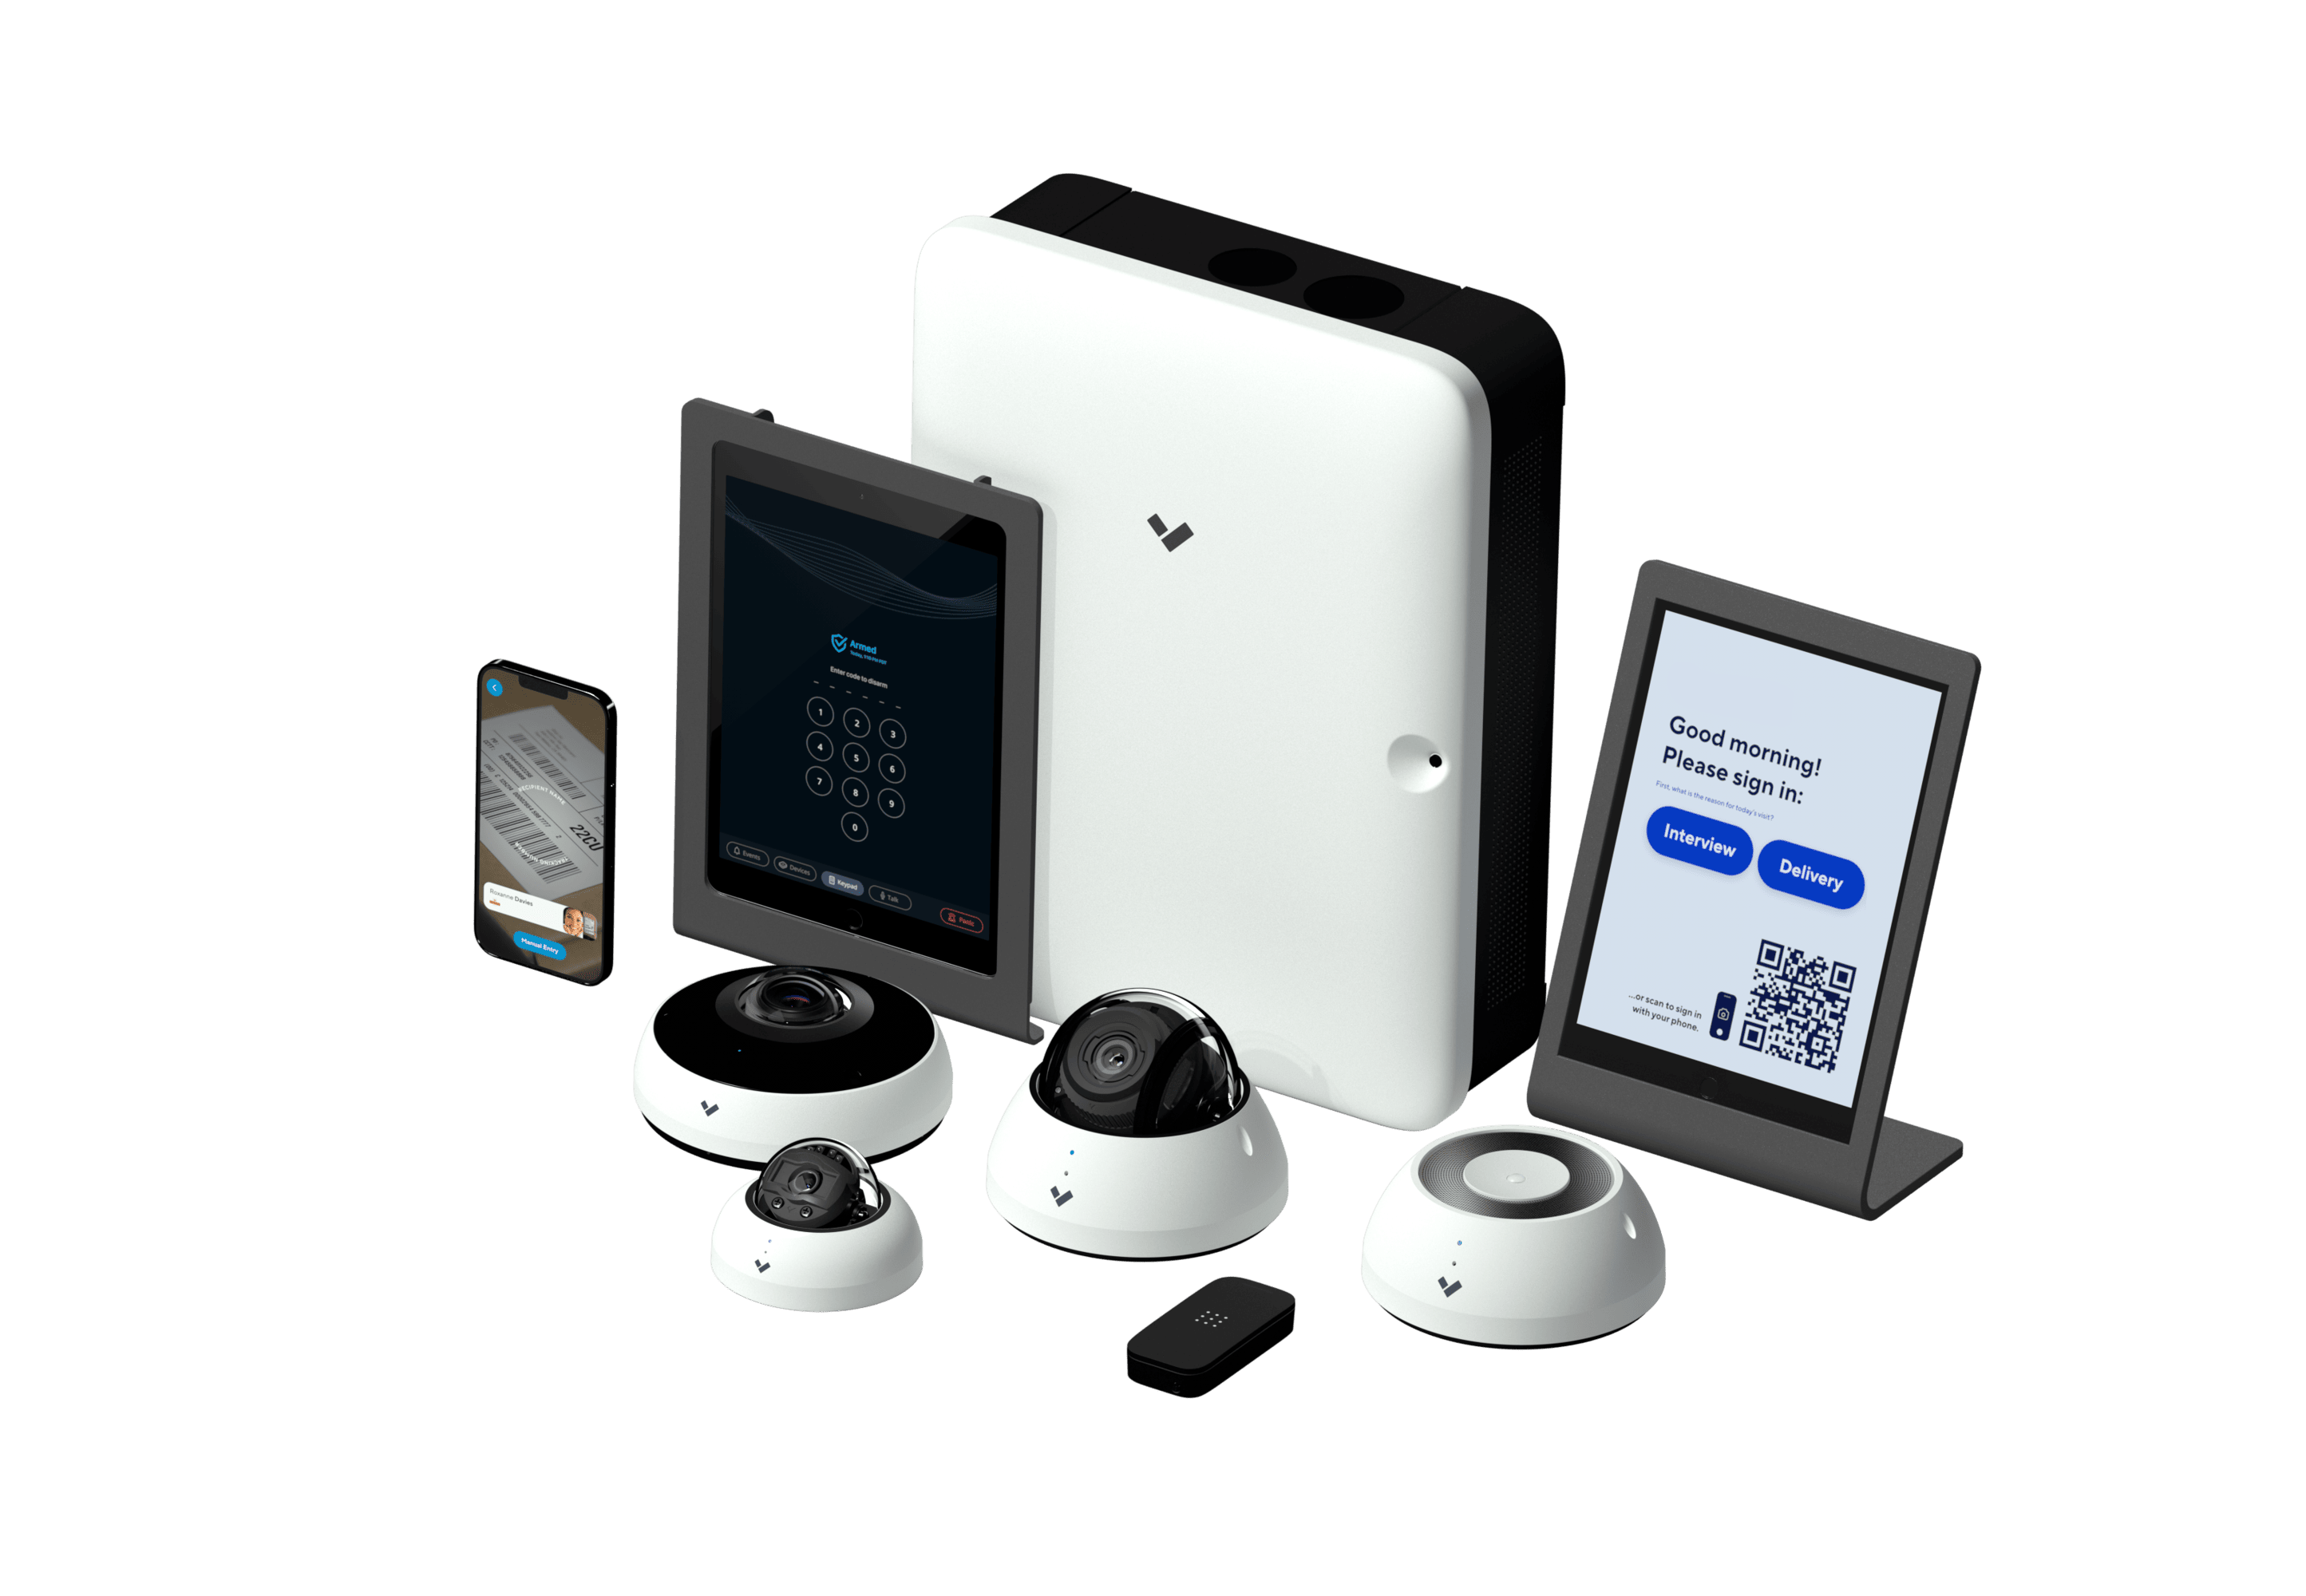 Verkada Family System including crystal clear security cameras